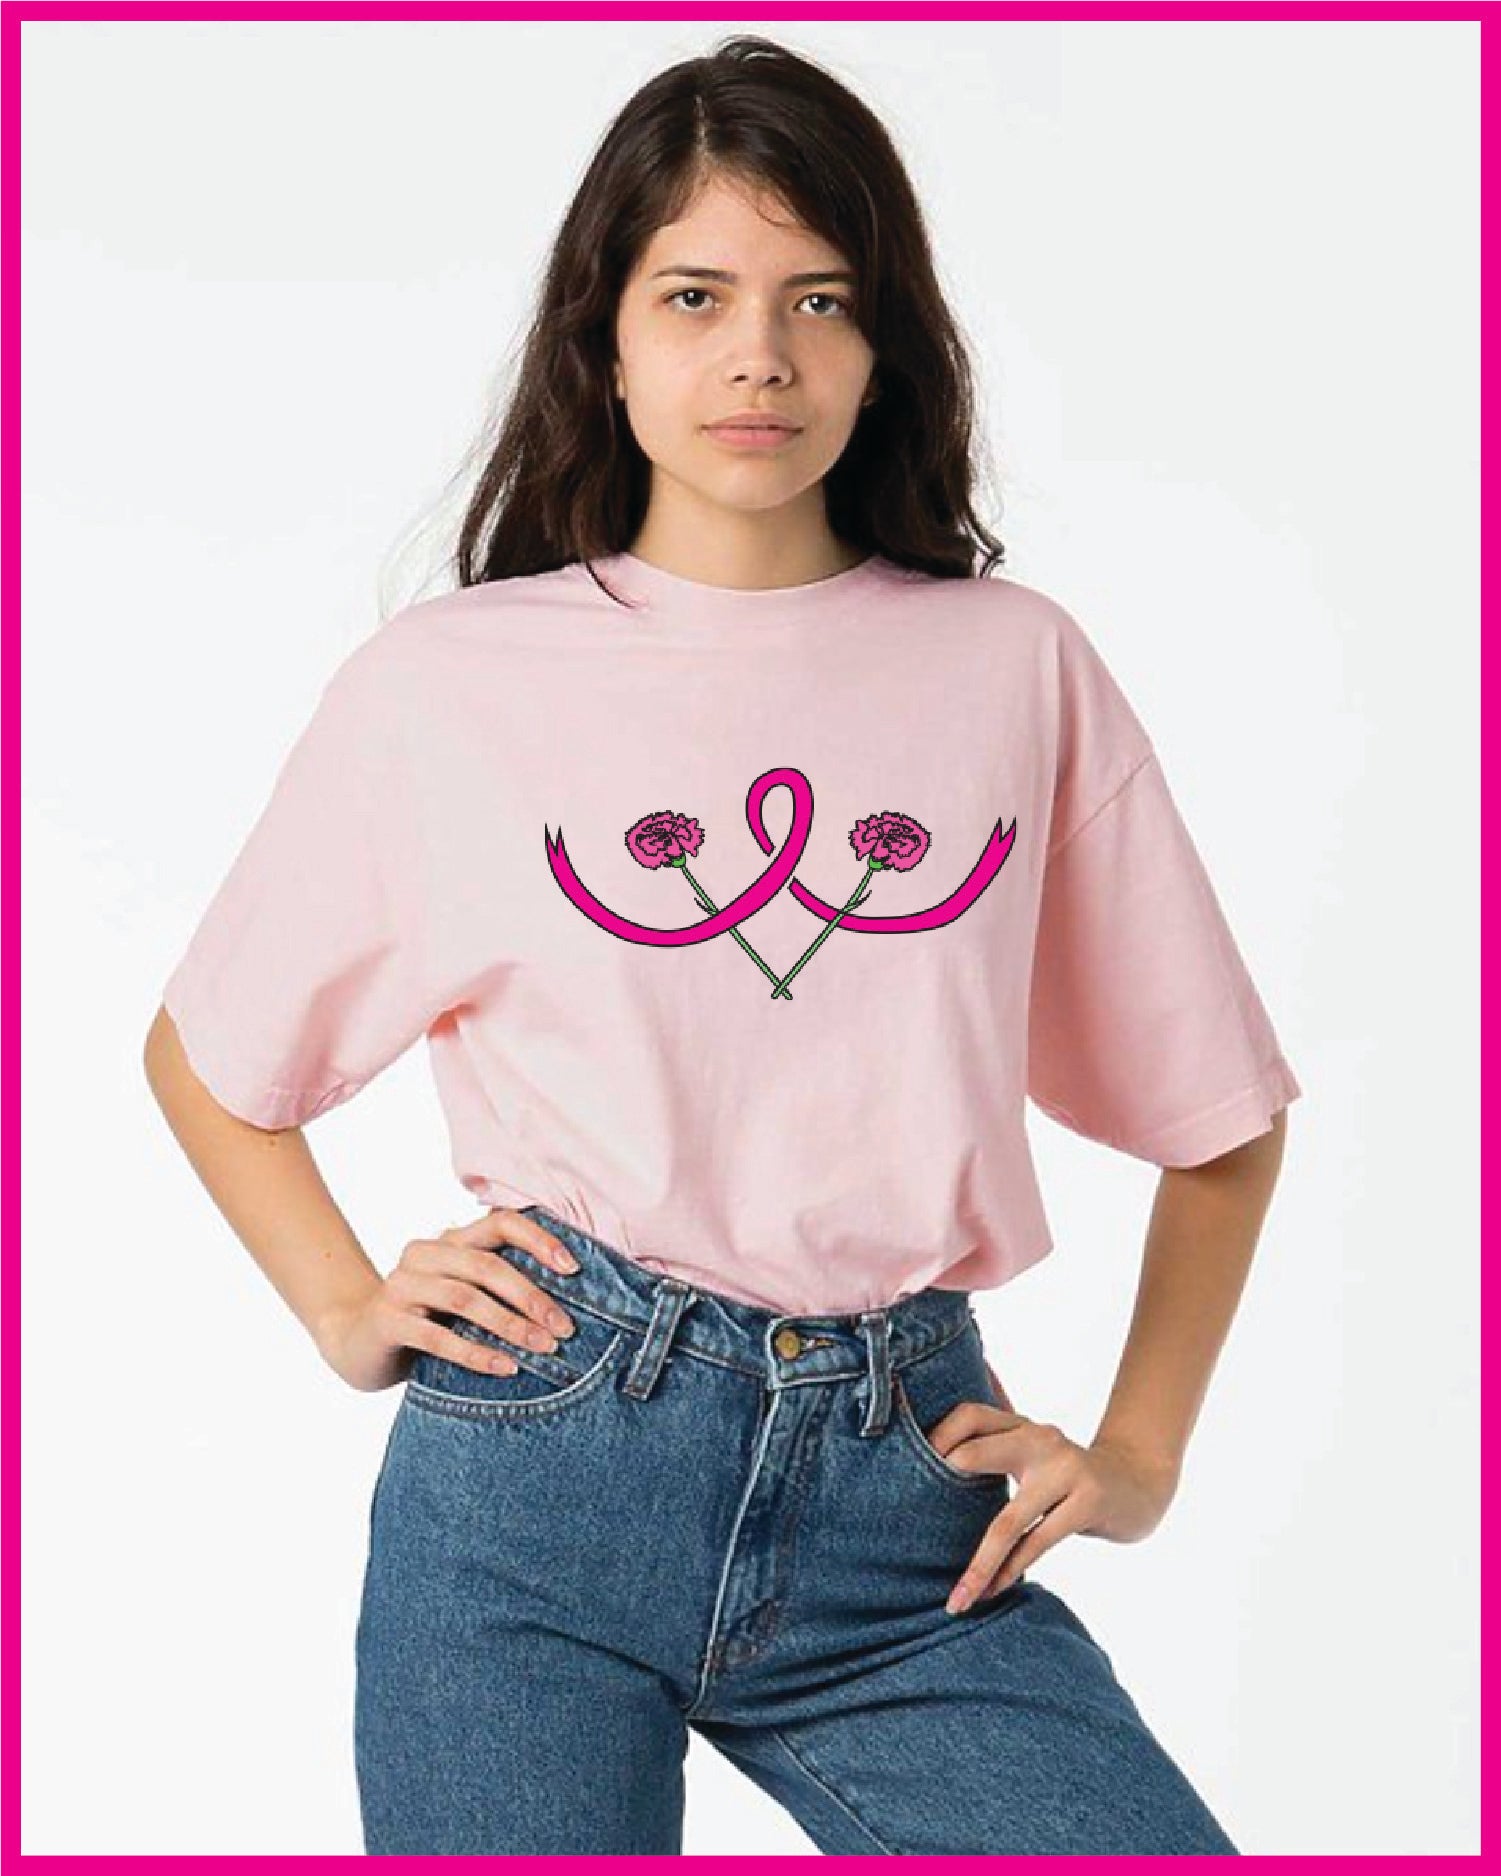 Pink Carnation "Hope" Awareness Shirt Myüze X Chappe